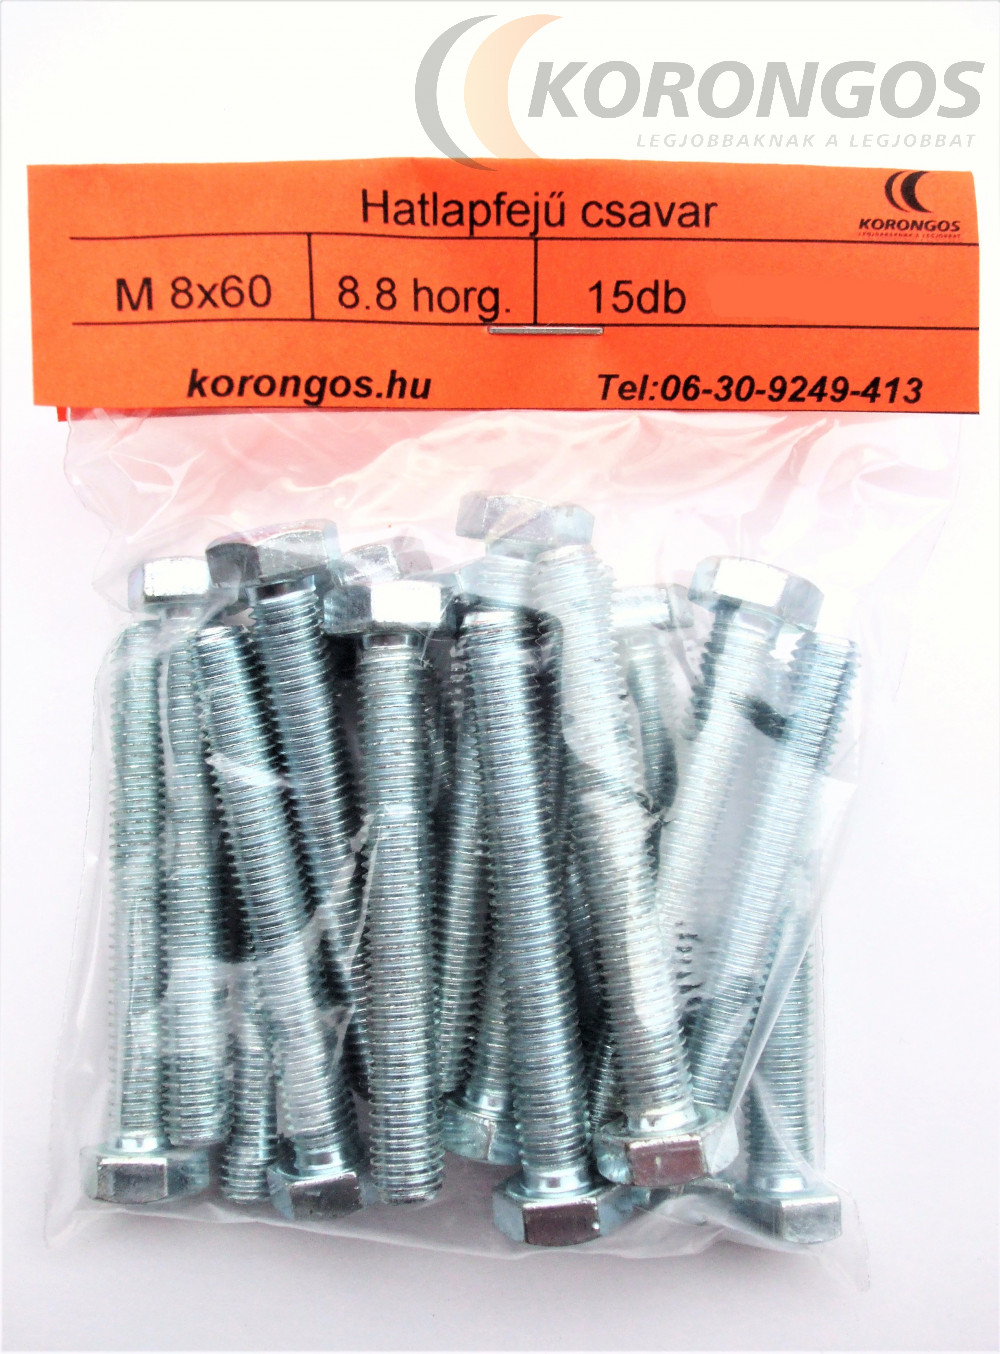 Hatlapfejű csavar M 8X60 15db-os csomagban - Korongos